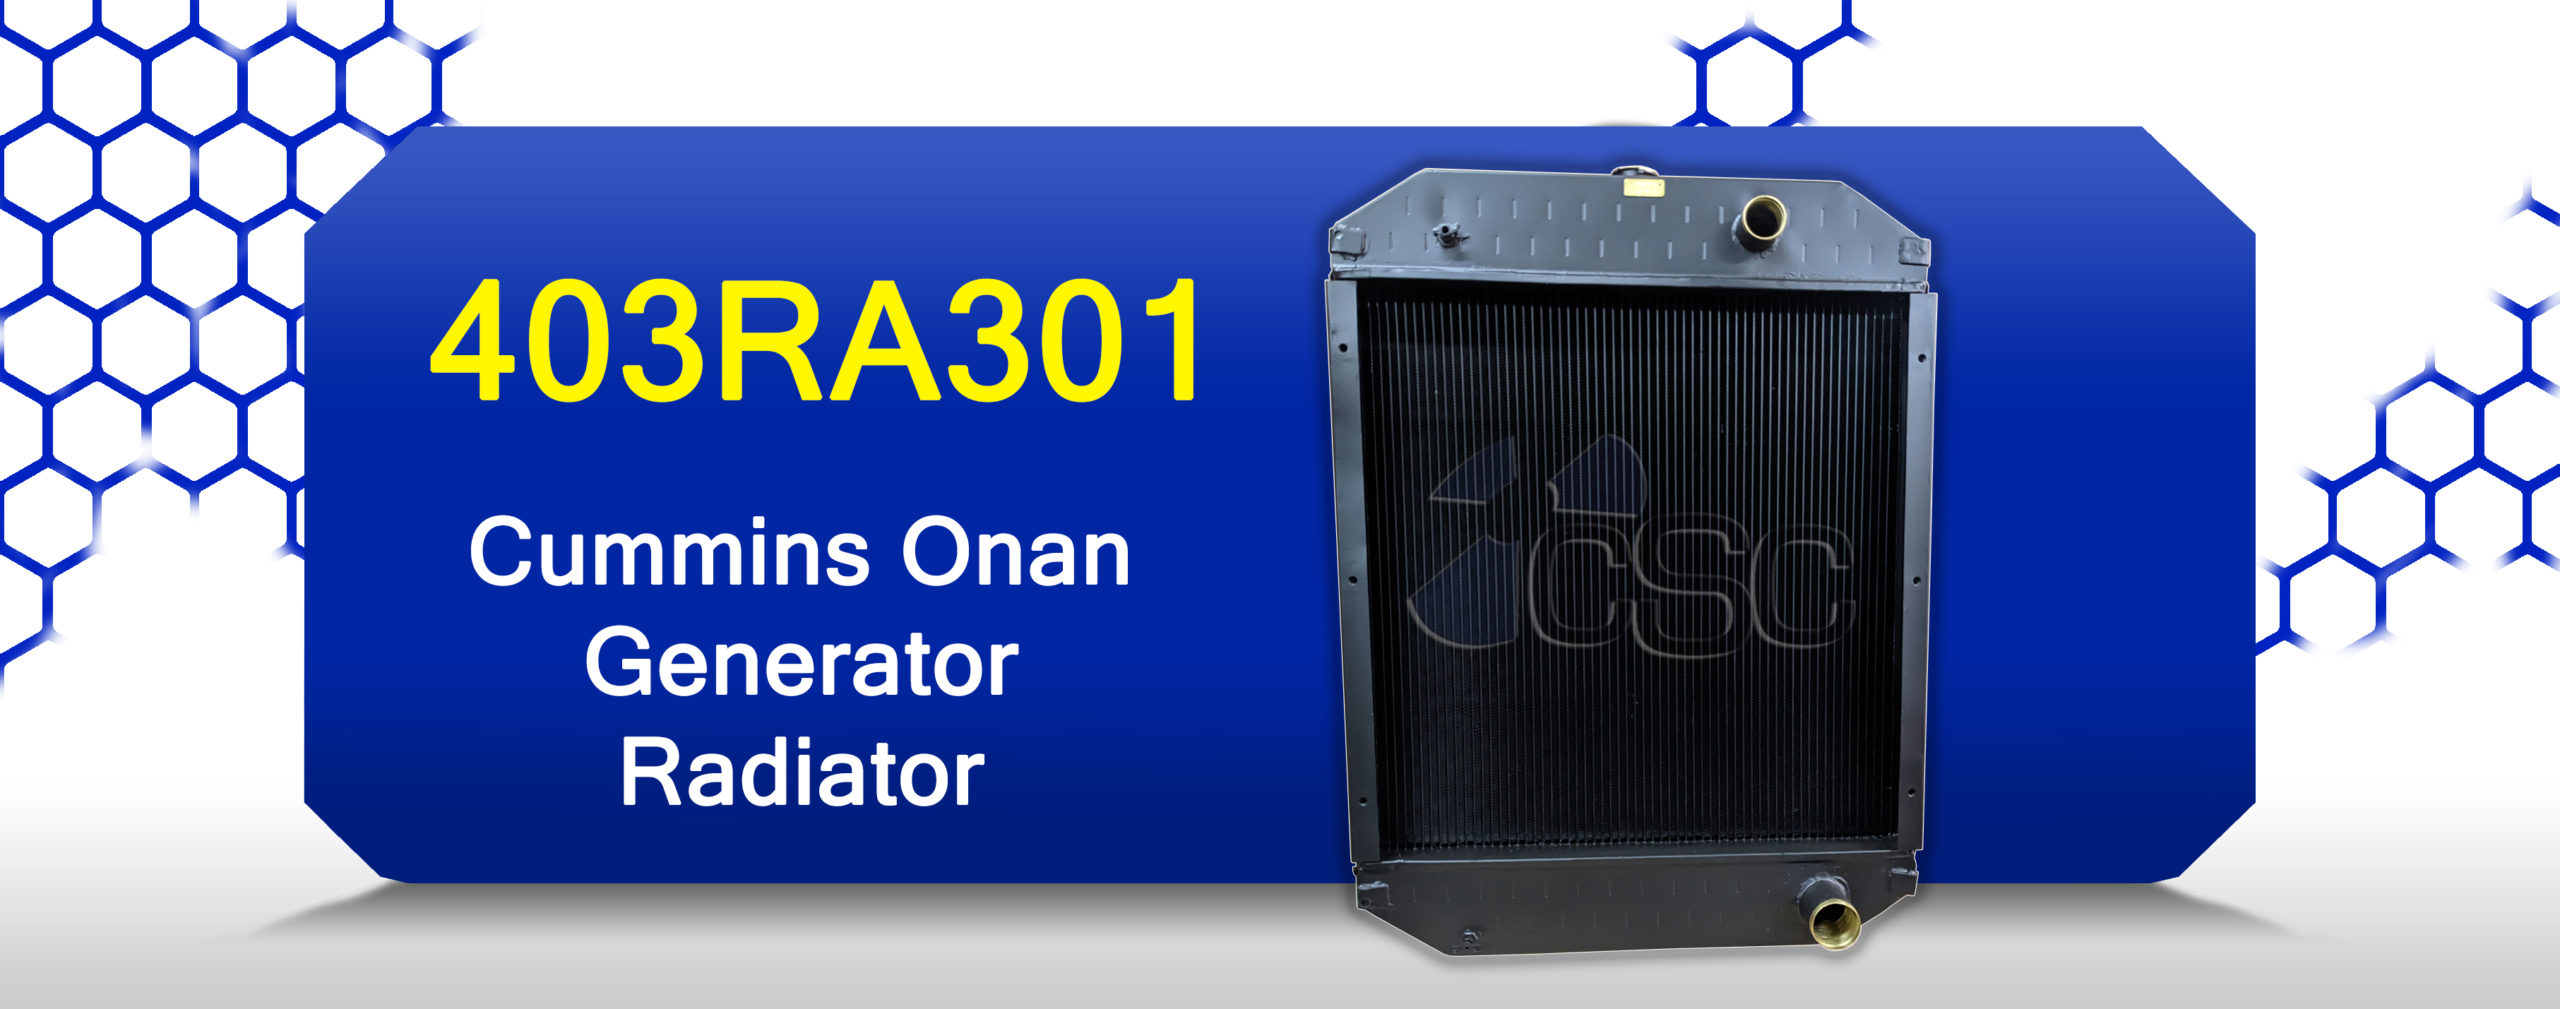 403RA301 radiator for 80kw Cummins Onan generator